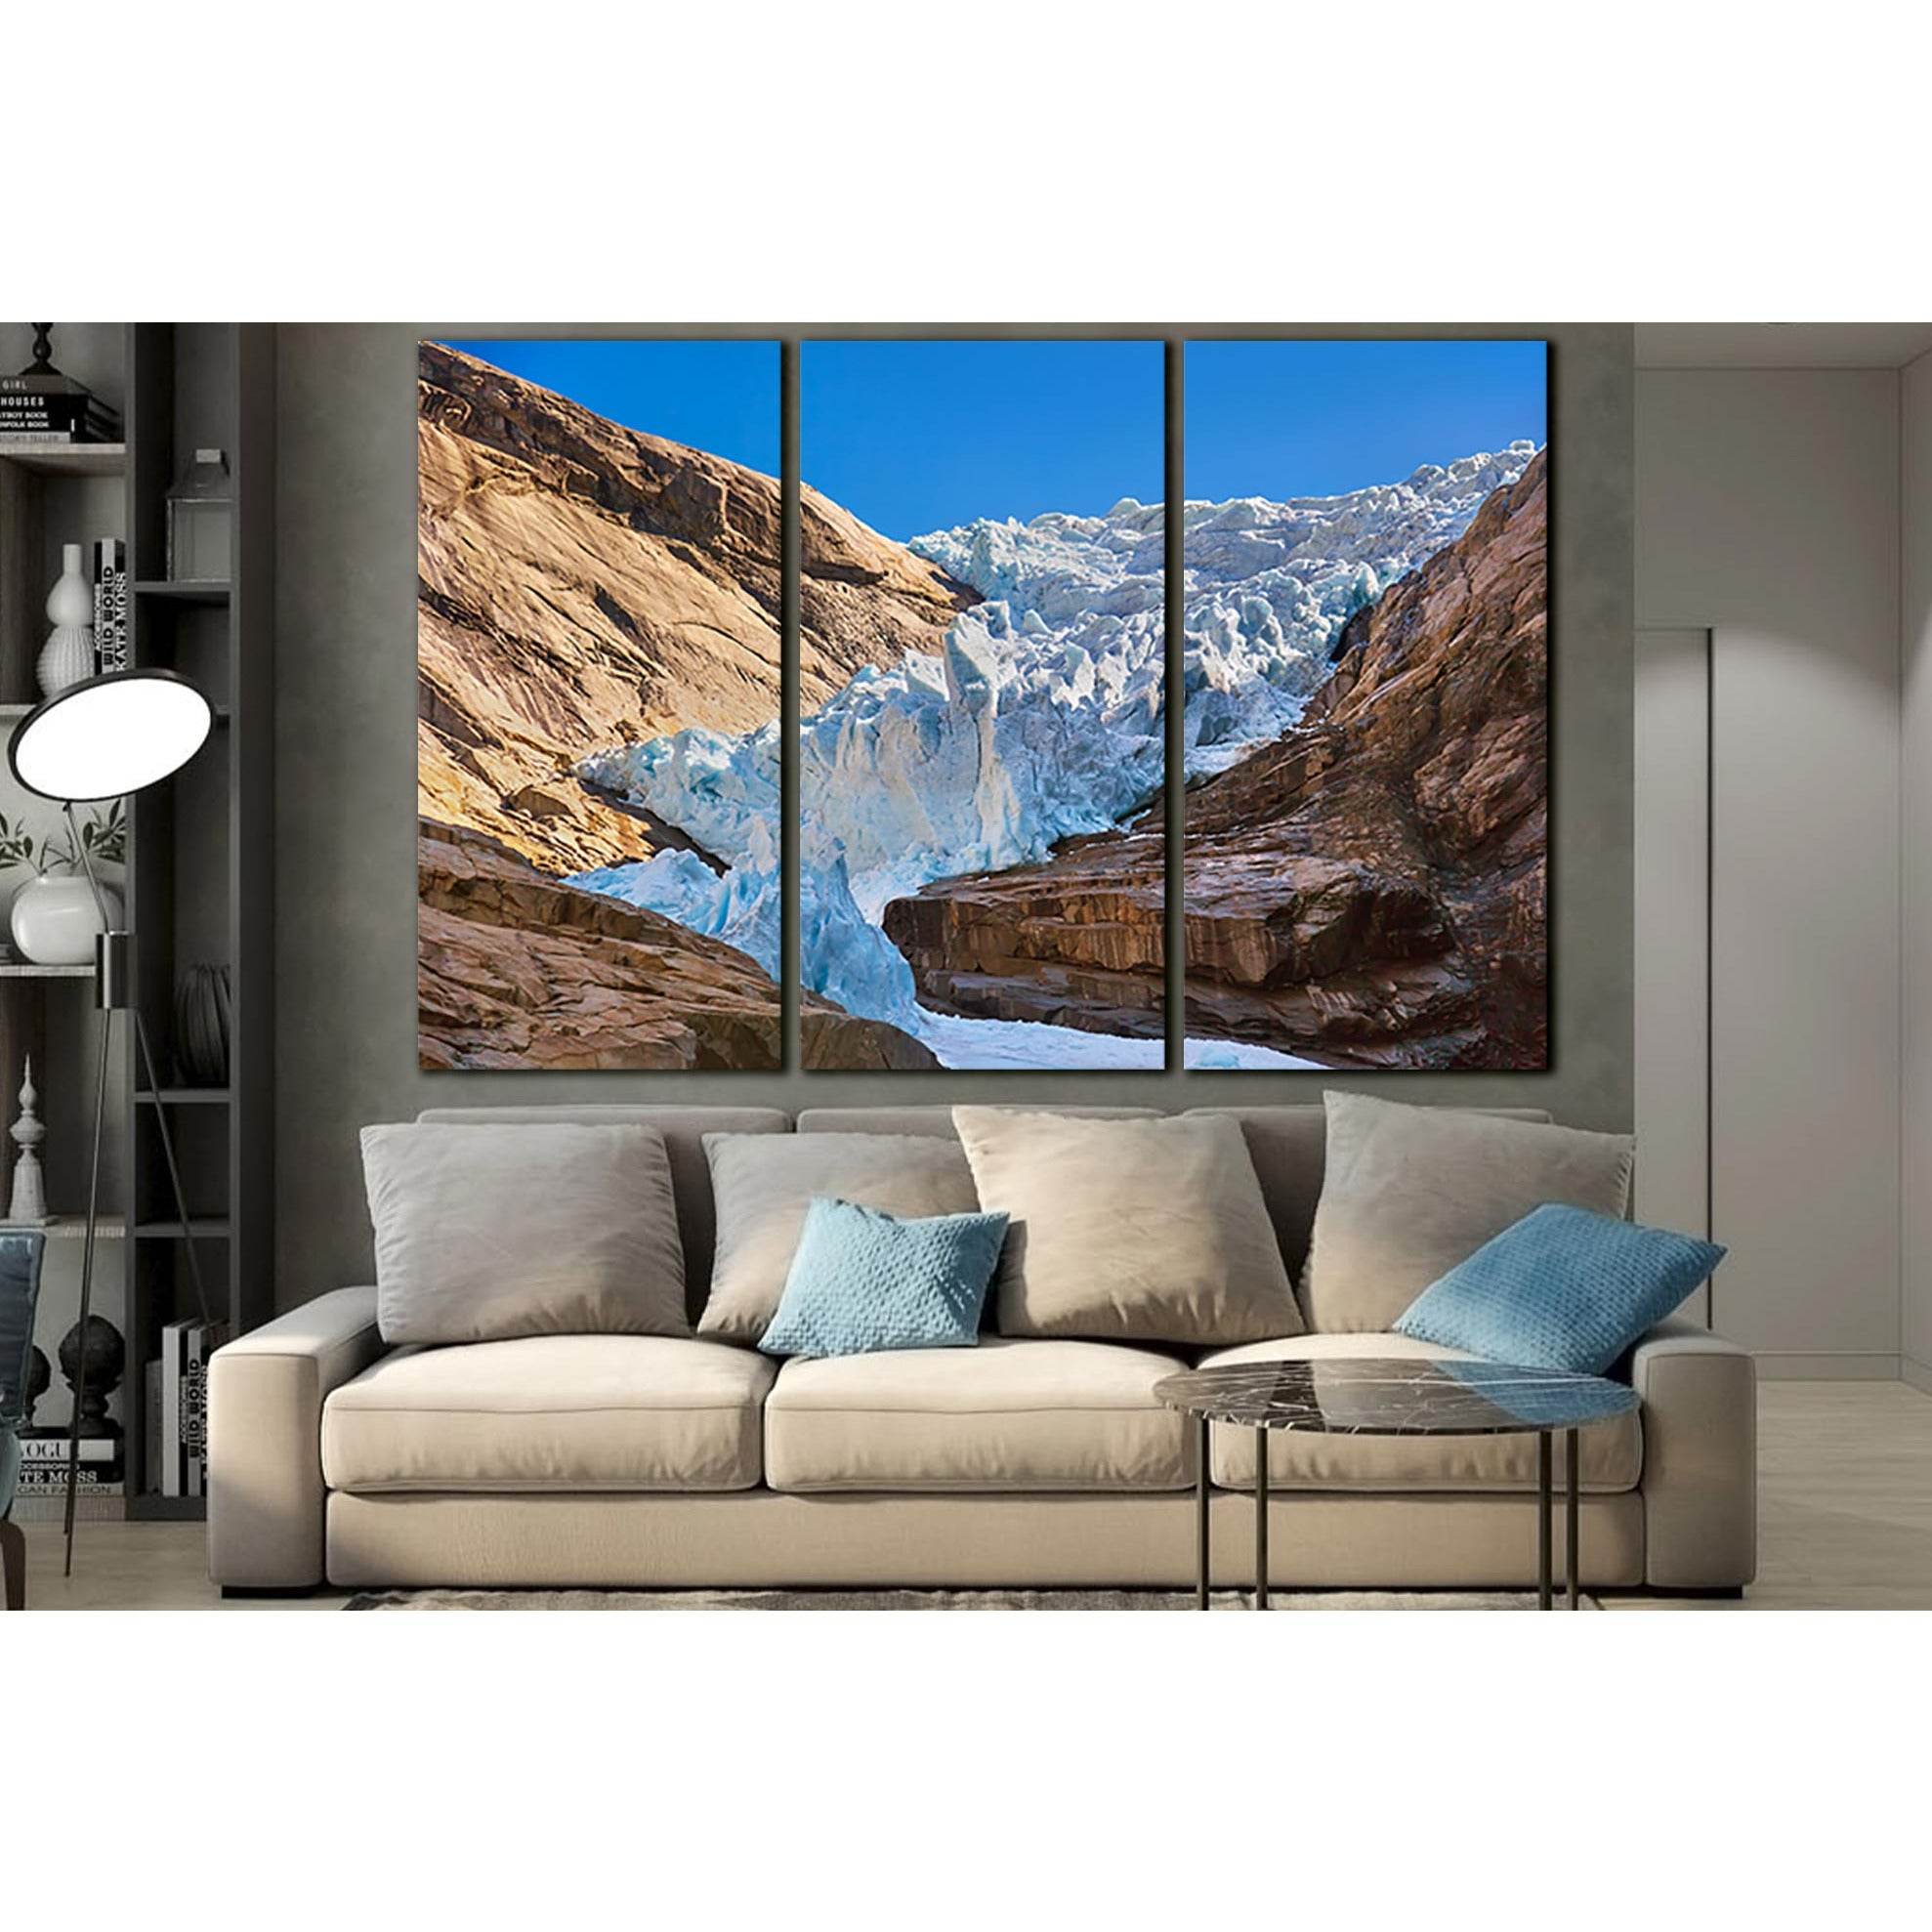 Briksdal Glacier Norway №SL1353 Ready to Hang Canvas Print